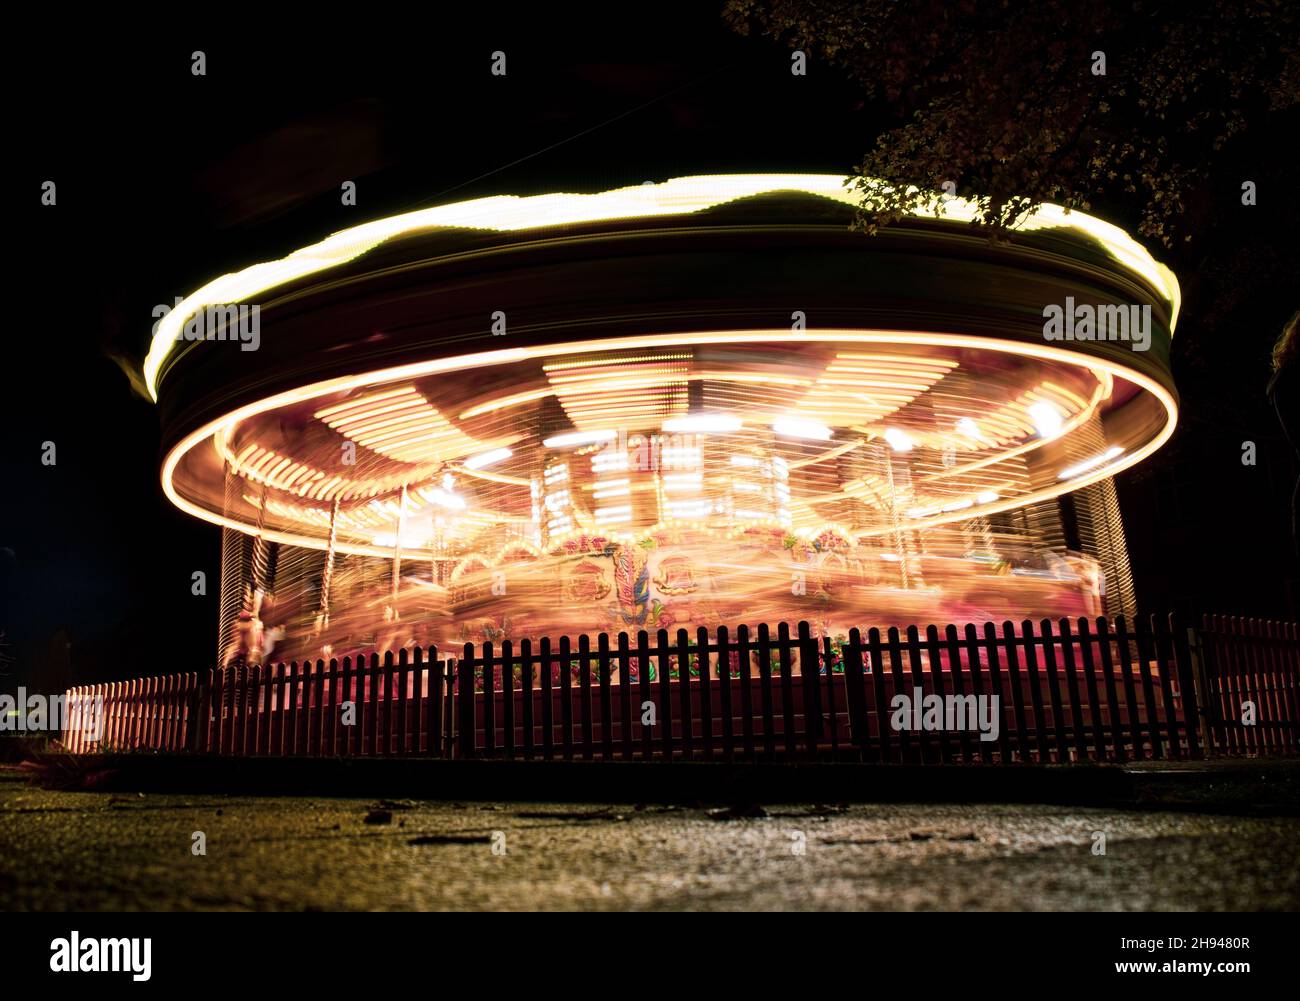 Merry-Go-Round Carousel at Night, Fairground Ride Stock Photo